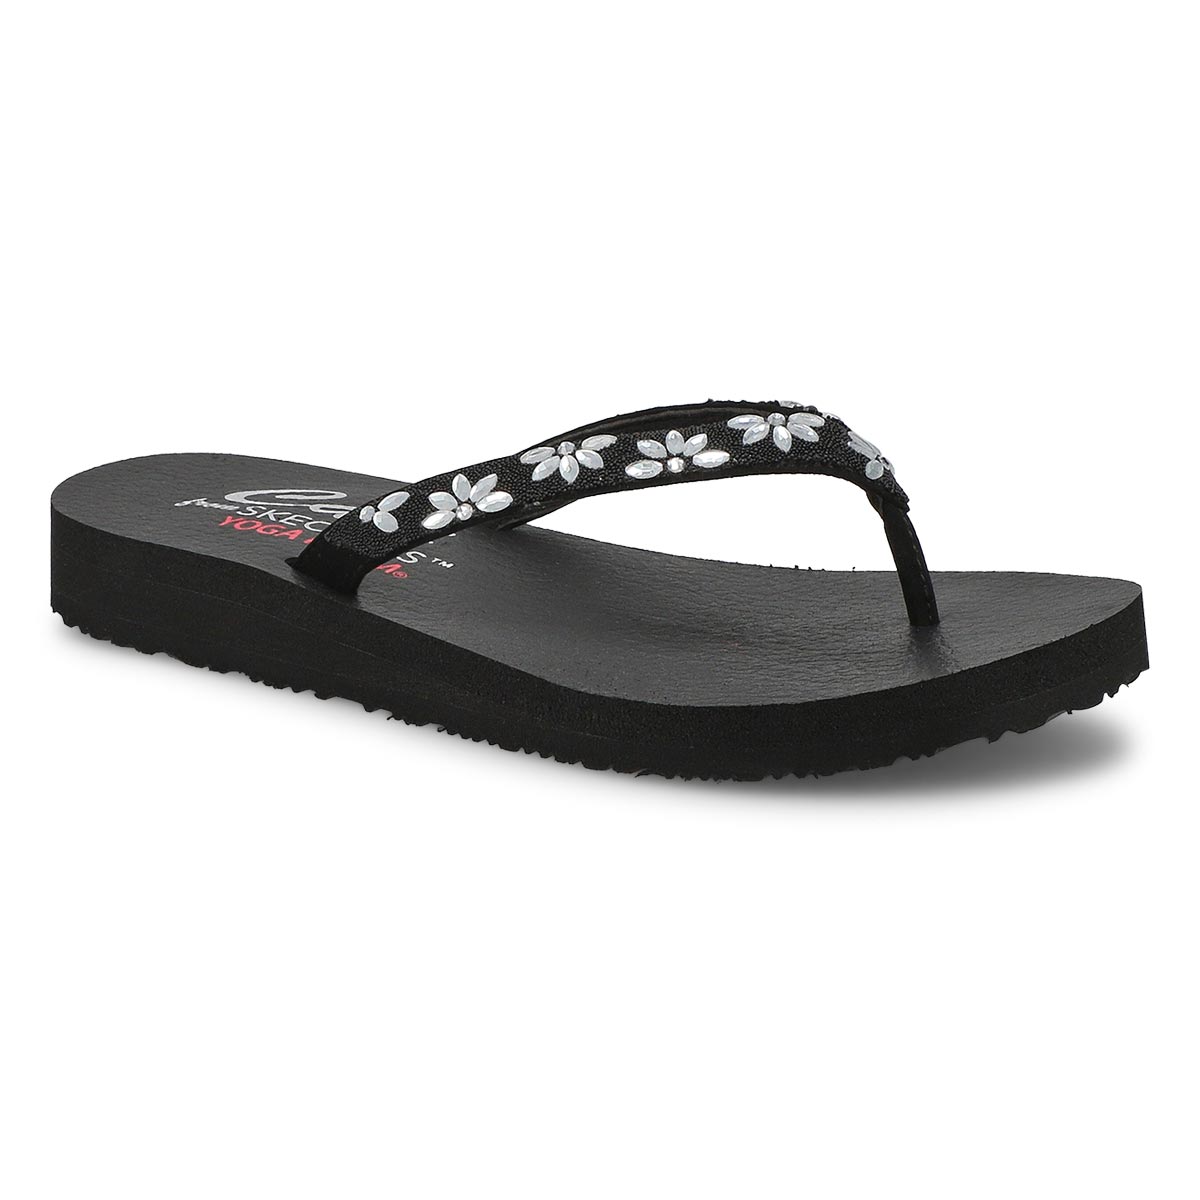 Skechers Yoga Foam Vegan Sparkle Black Womens Sandals Comfort Size